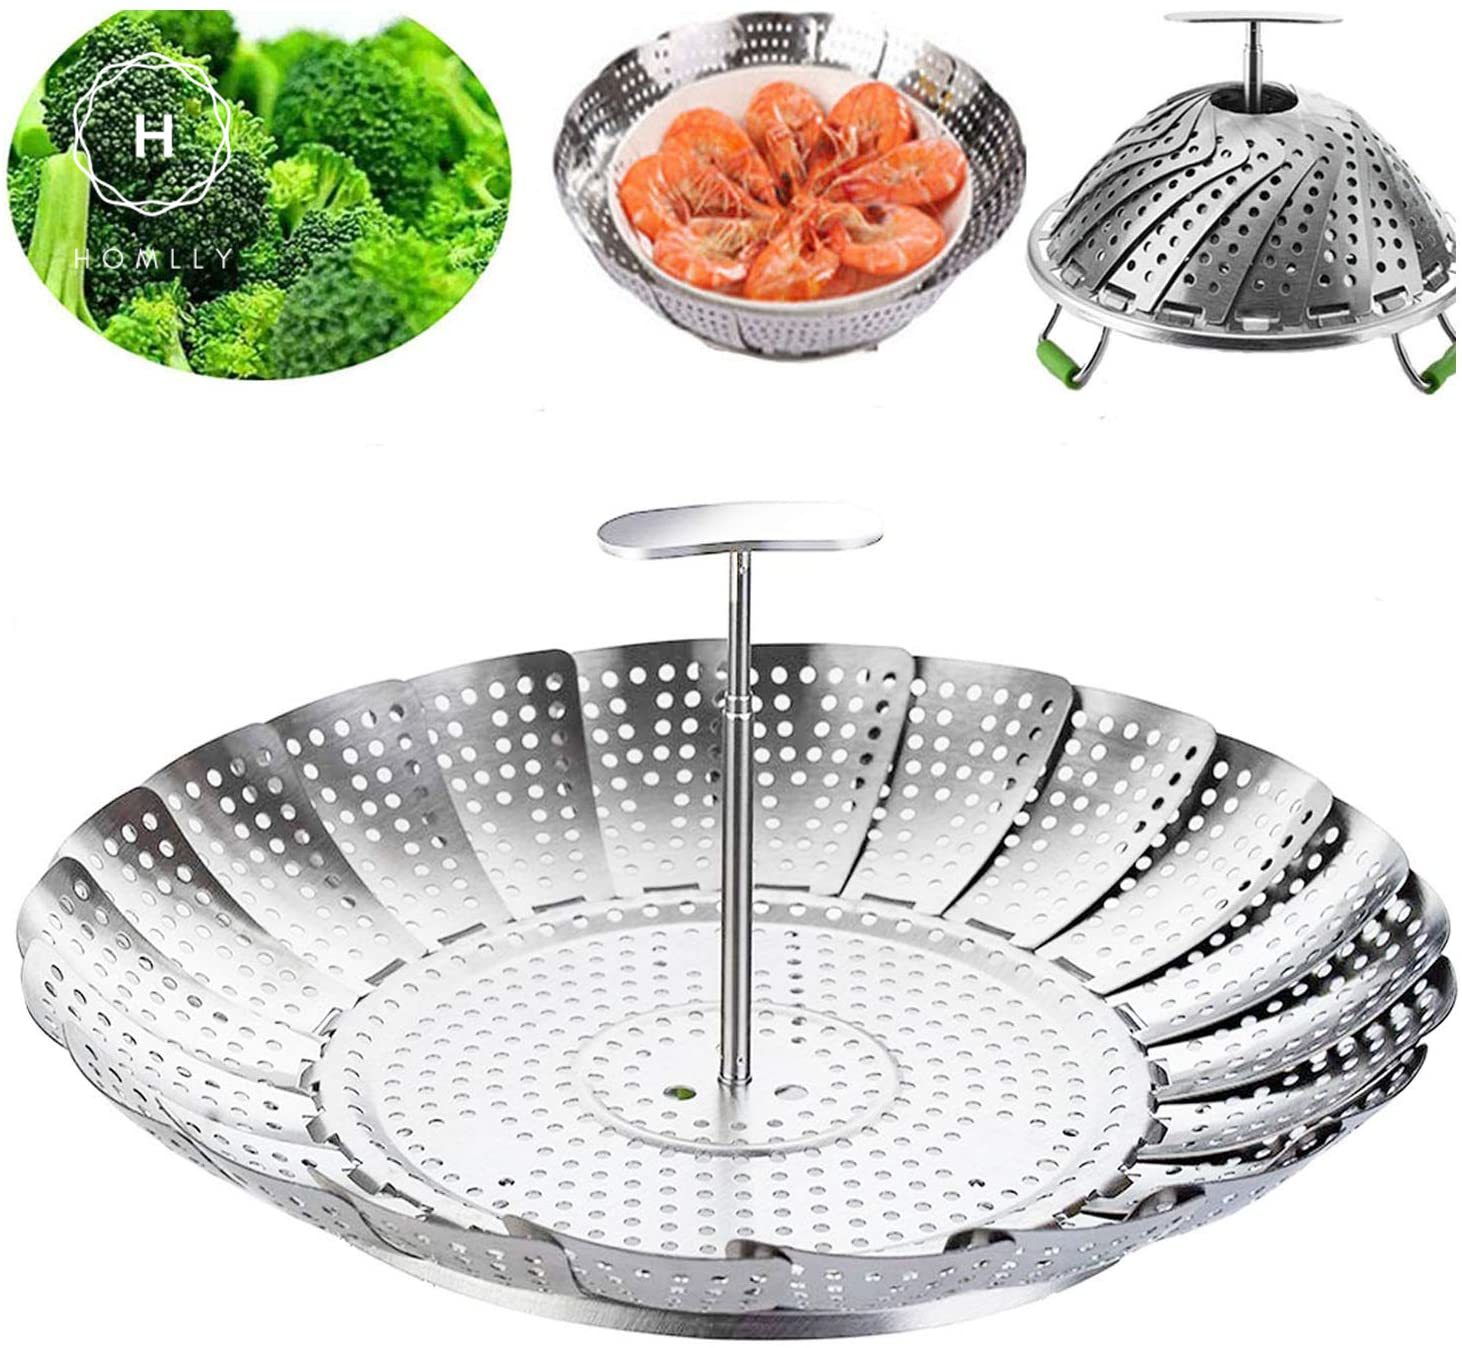 Steamer Basket, Vegetable Steamer For Cooking, Insert Pot Steamer Basket,  Veggie Food Steamer, Stainless Steel Steaming Basket, Folding Expandable &  Adjustable, Fits Any Size Pan 